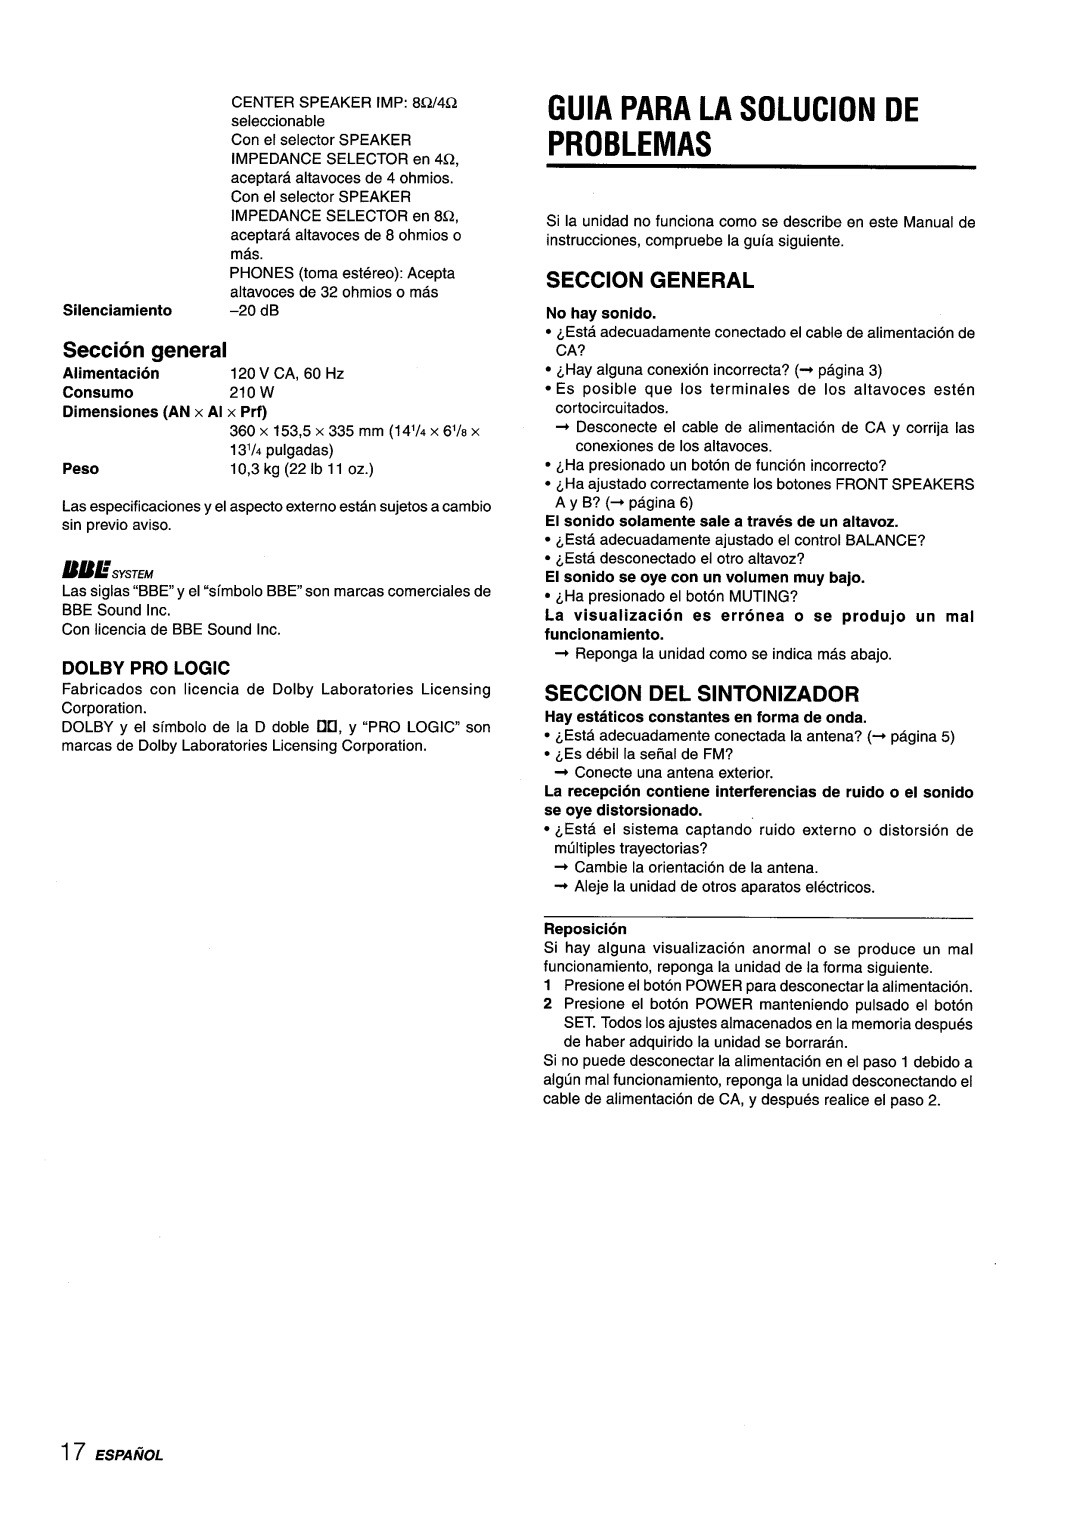 Aiwa AV-X220 manual Guia Para La Solucion De Problemas, general, Seccion General, Seccion Del Sintonizador, V CA, 60 Hz 